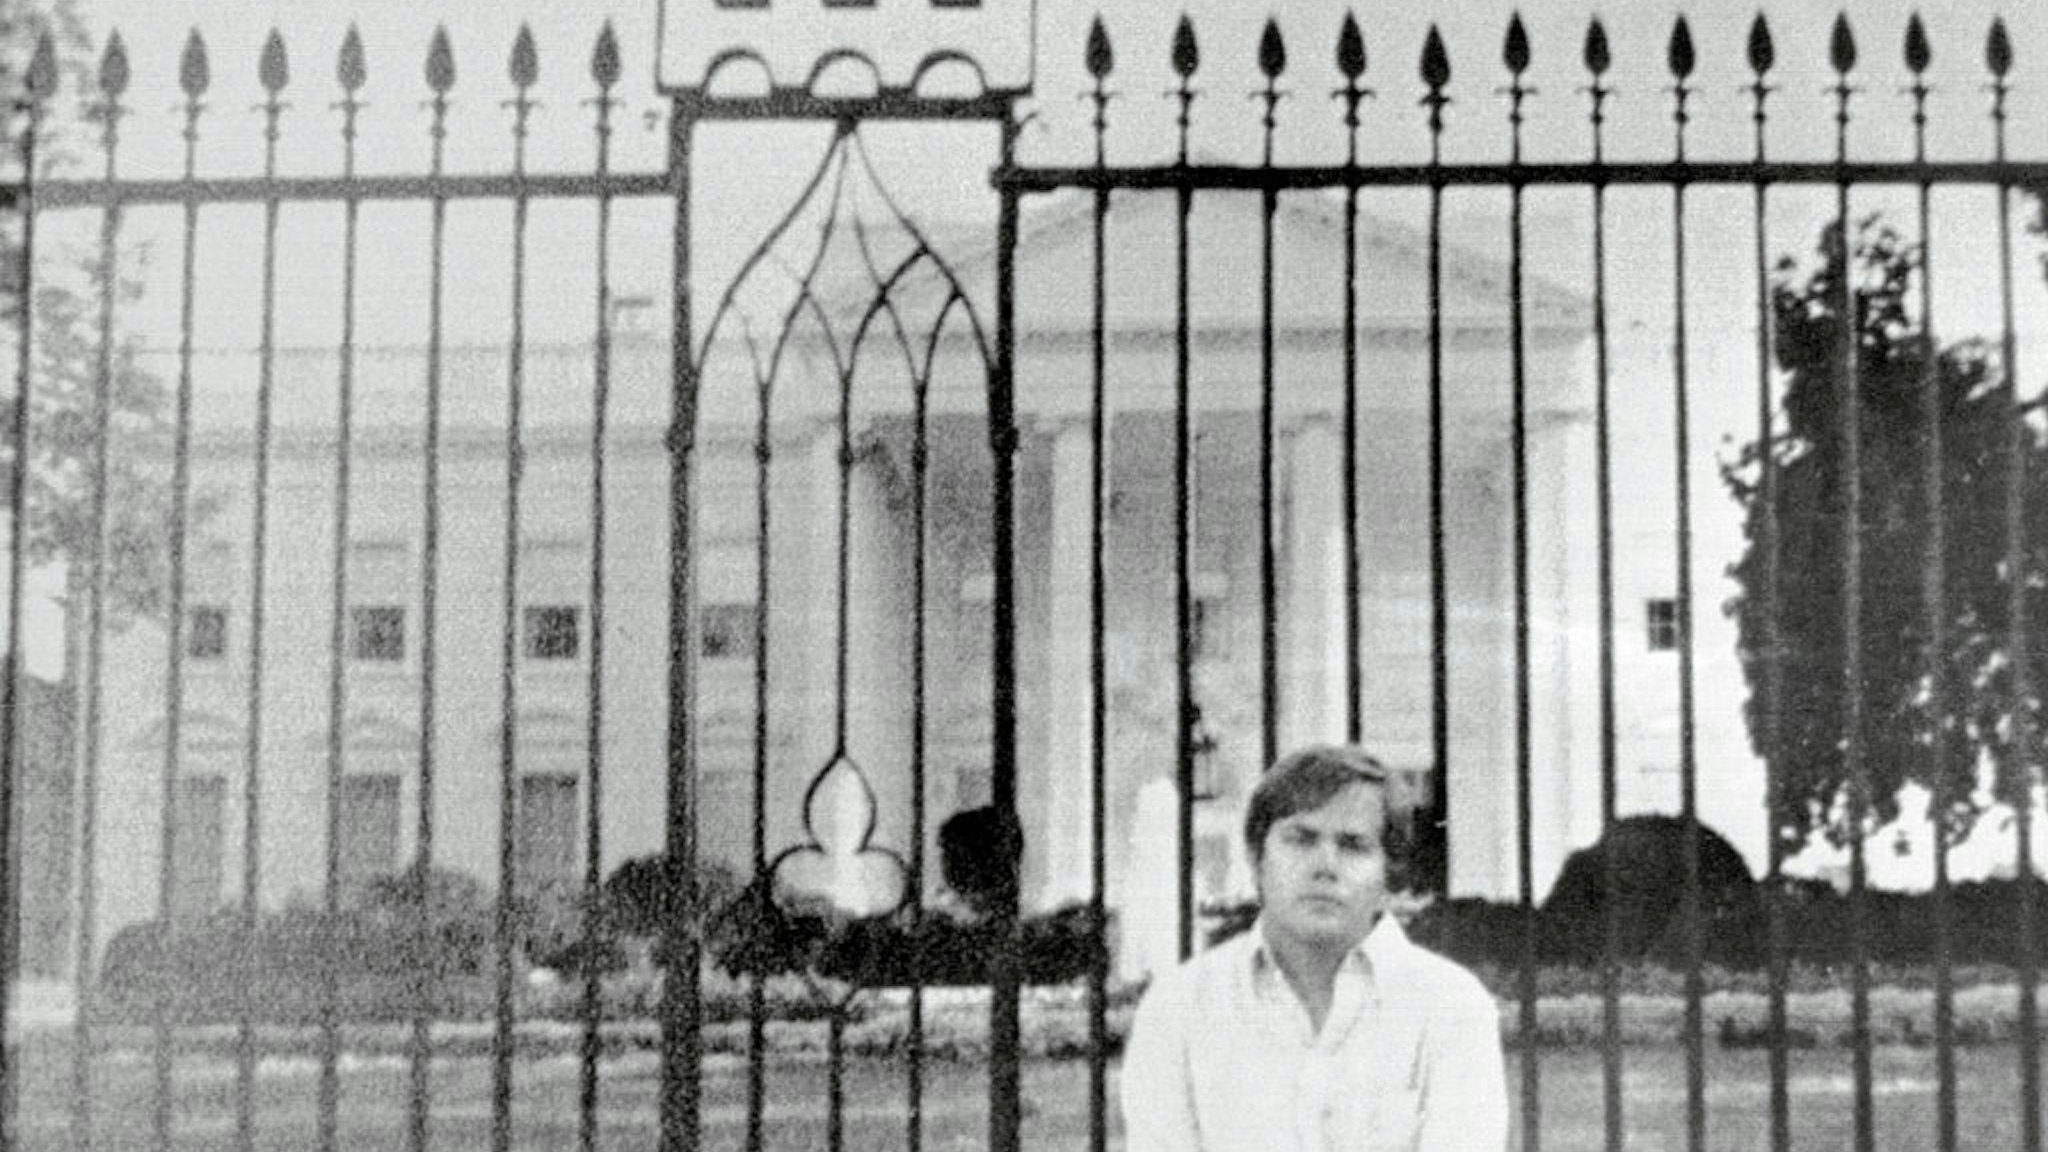 John Hinckley Jr. Posing in Front of White House